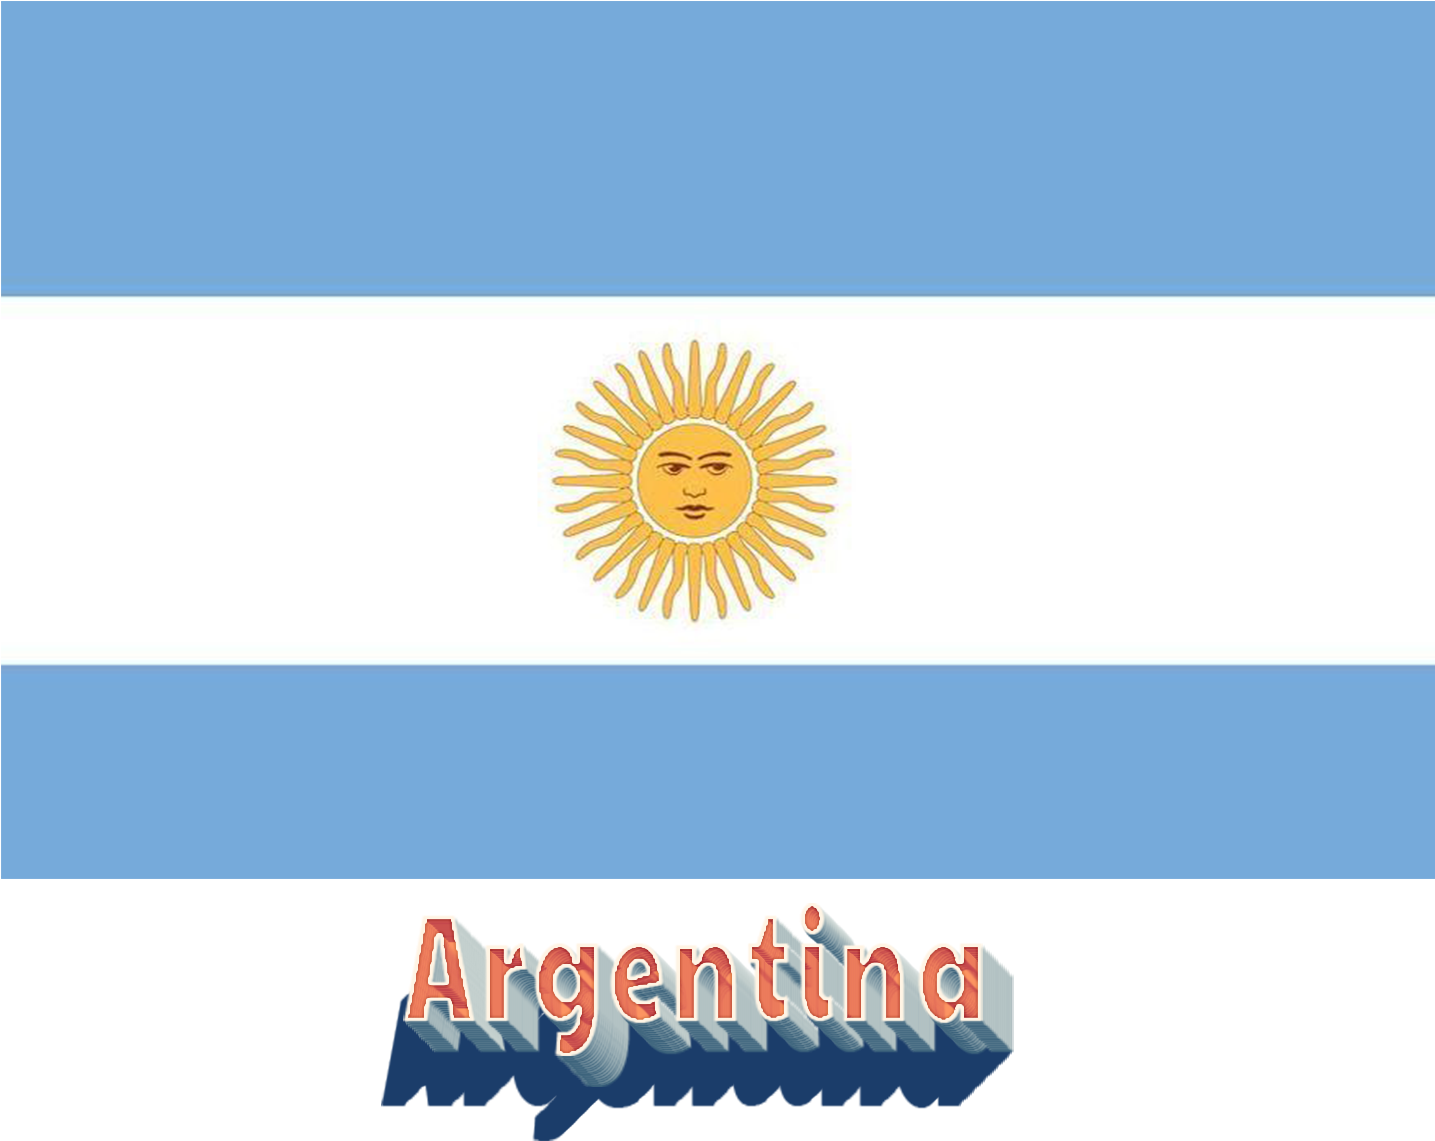 Argentinian Flagand Name Illustration